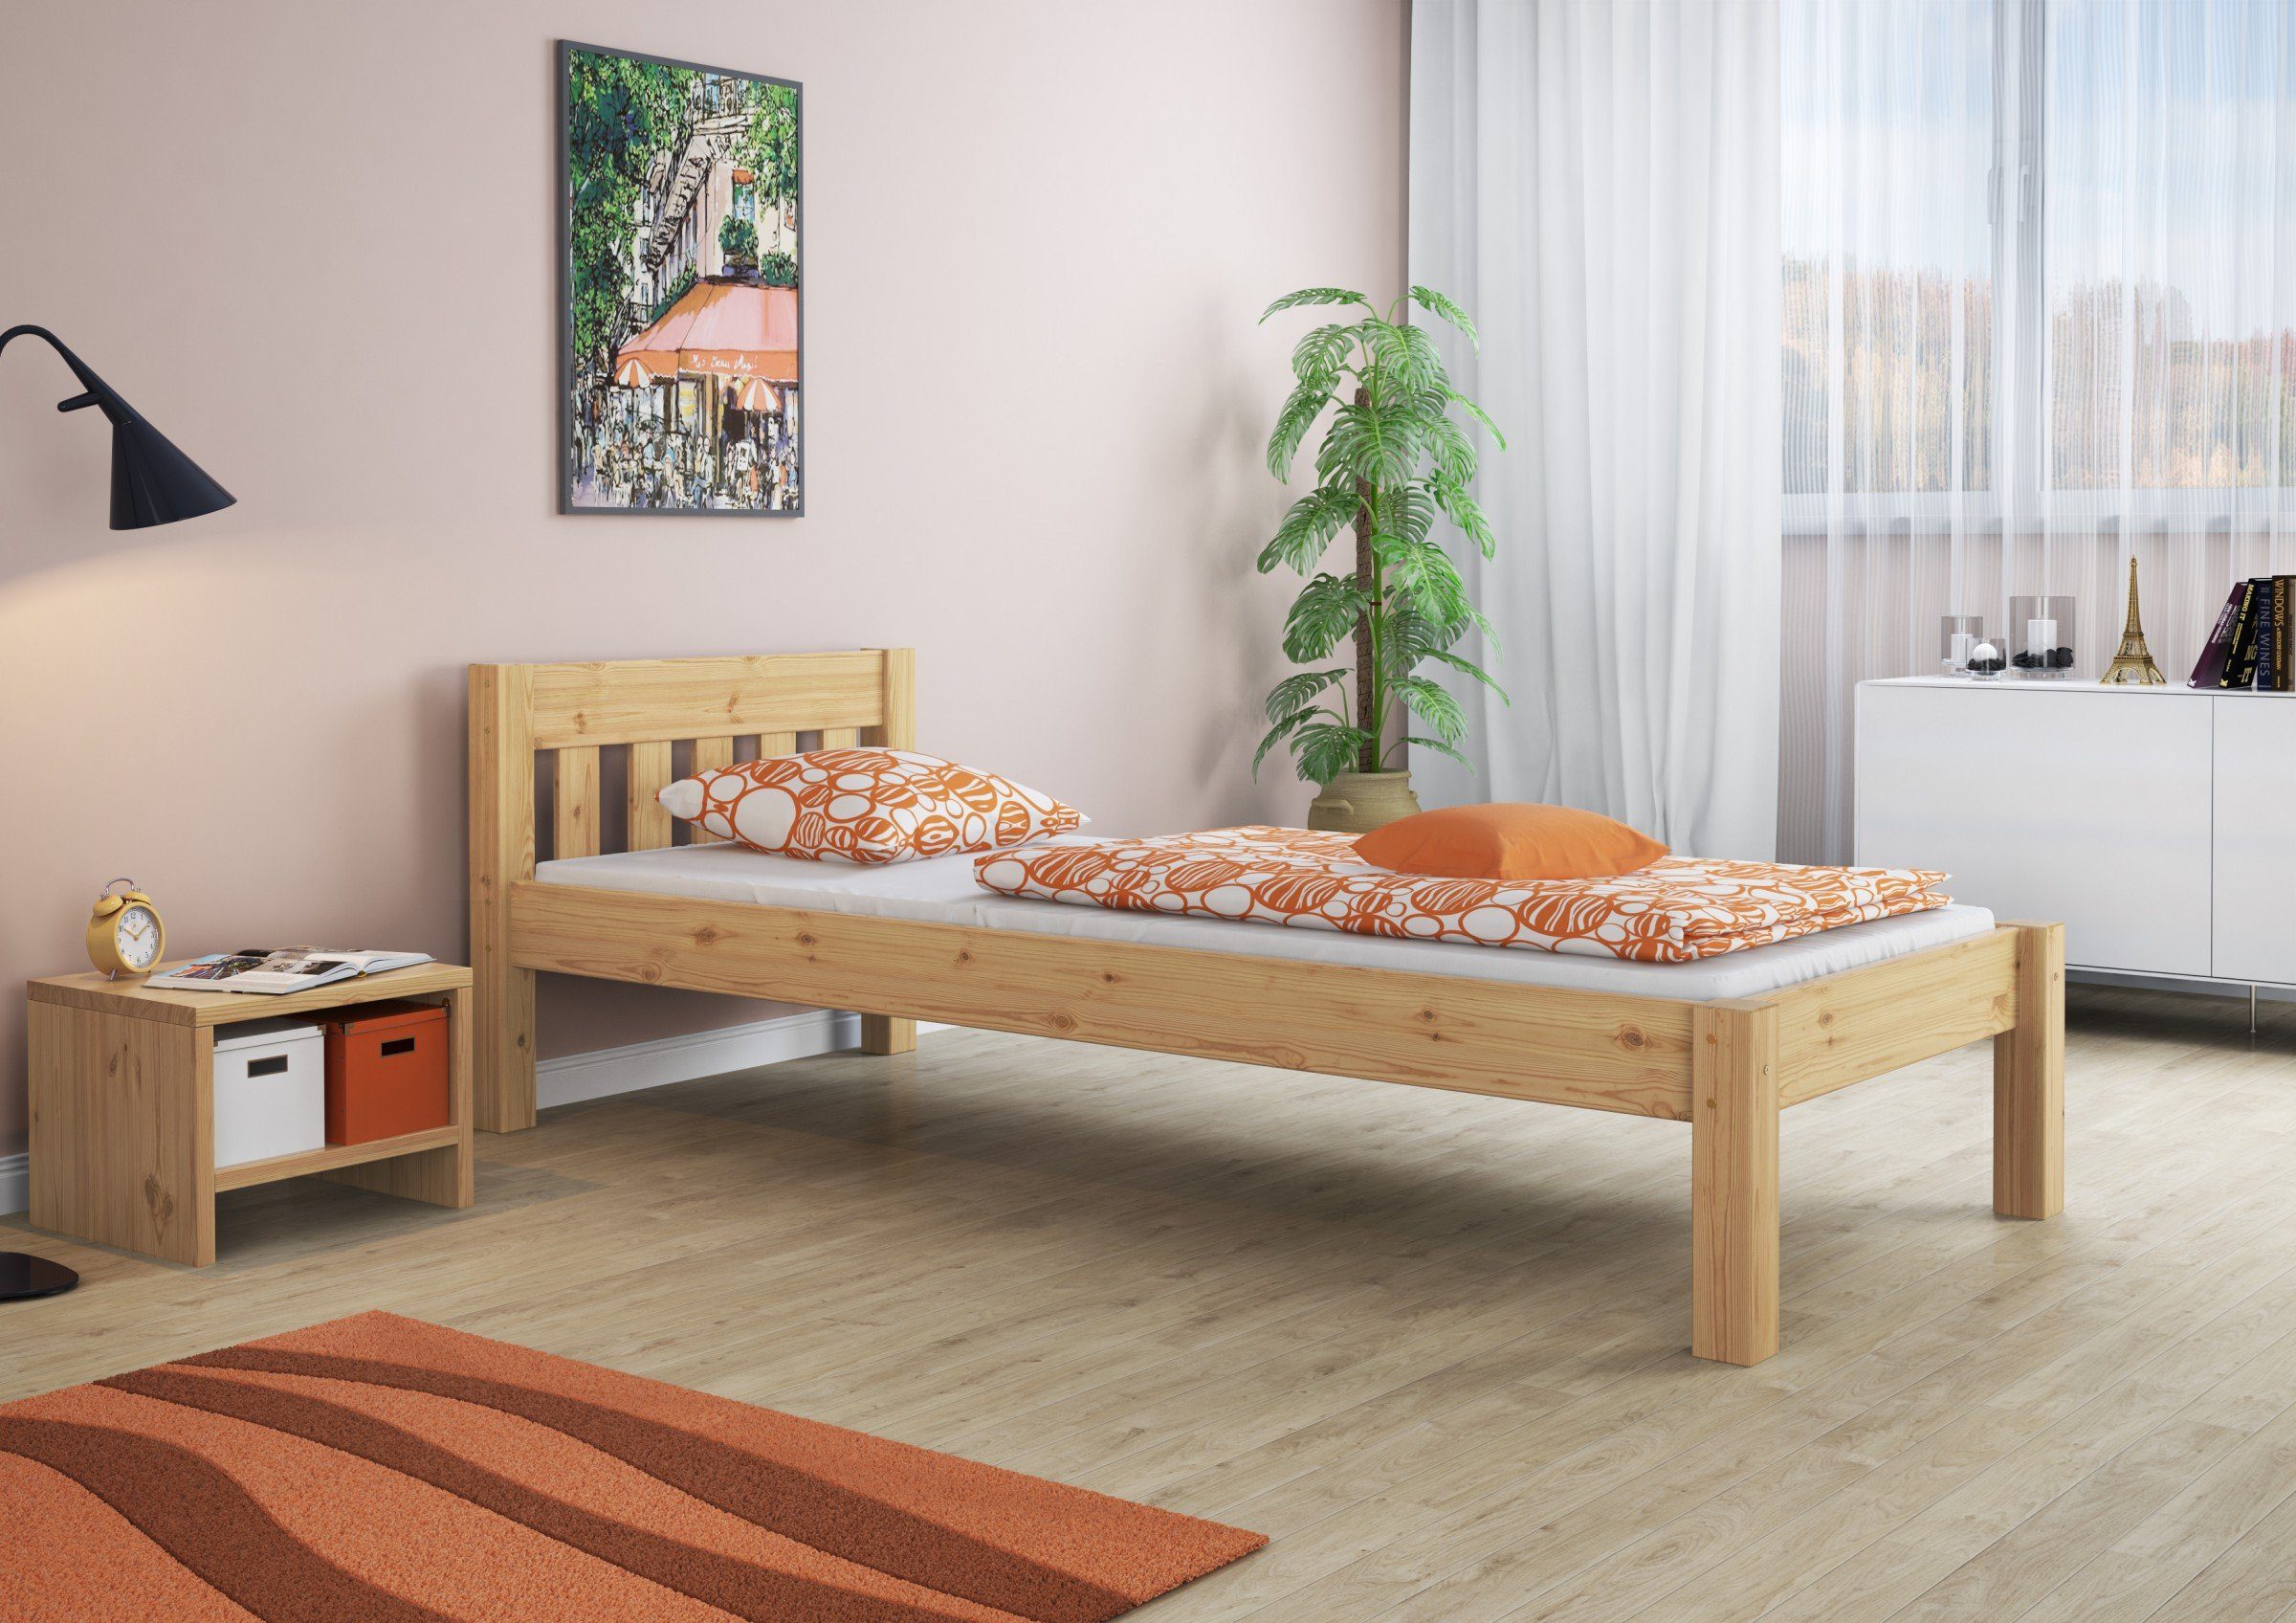 Kieferfarblos Kinderbett 90x190 Kiefer mit ERST-HOLZ Matratze, Kurzes Einzelbett lackiert Rost und